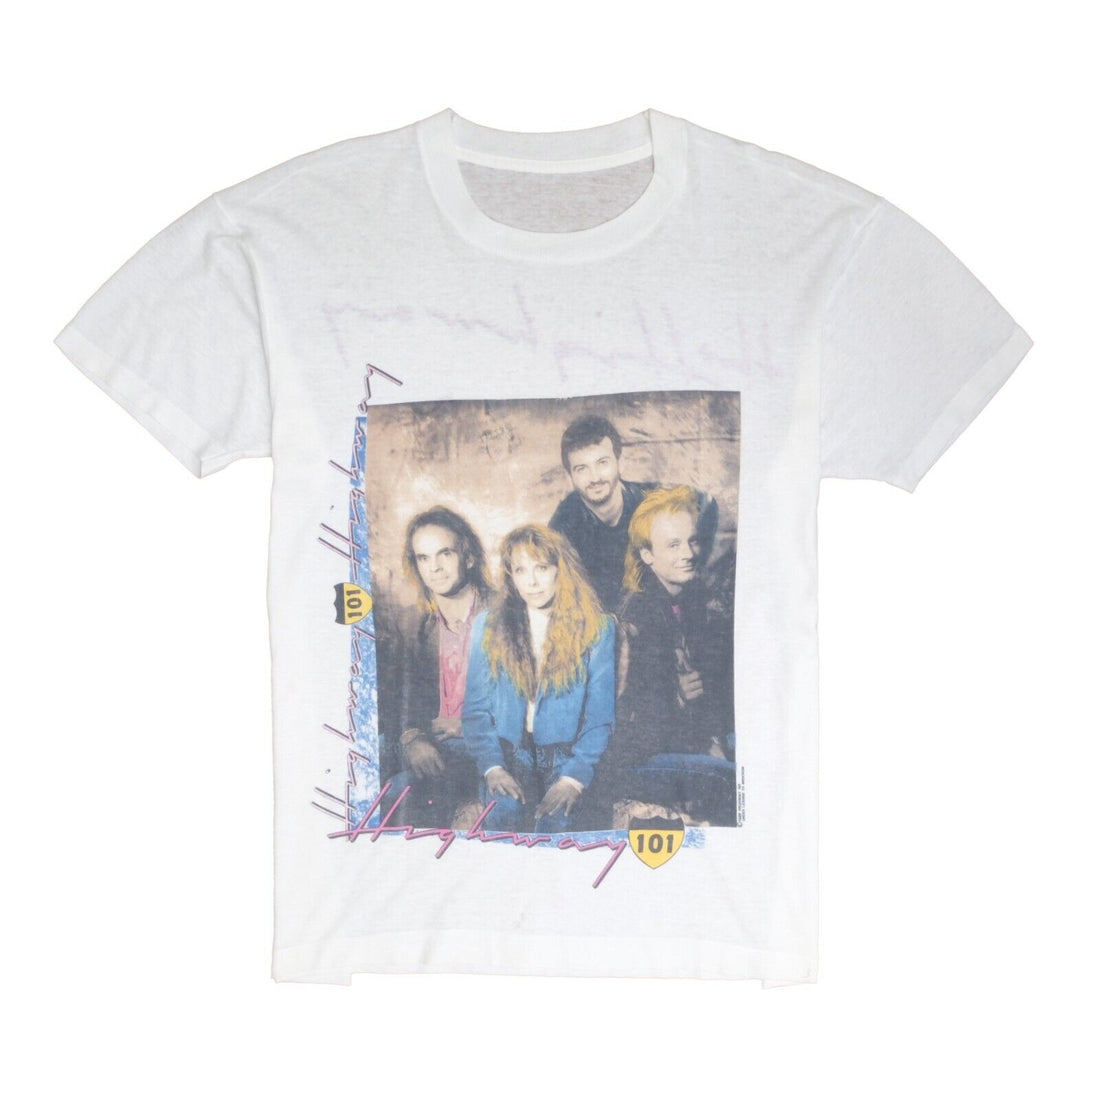 Vintage Highway 101 T-Shirt Size Medium White Music Tee 1989 80s